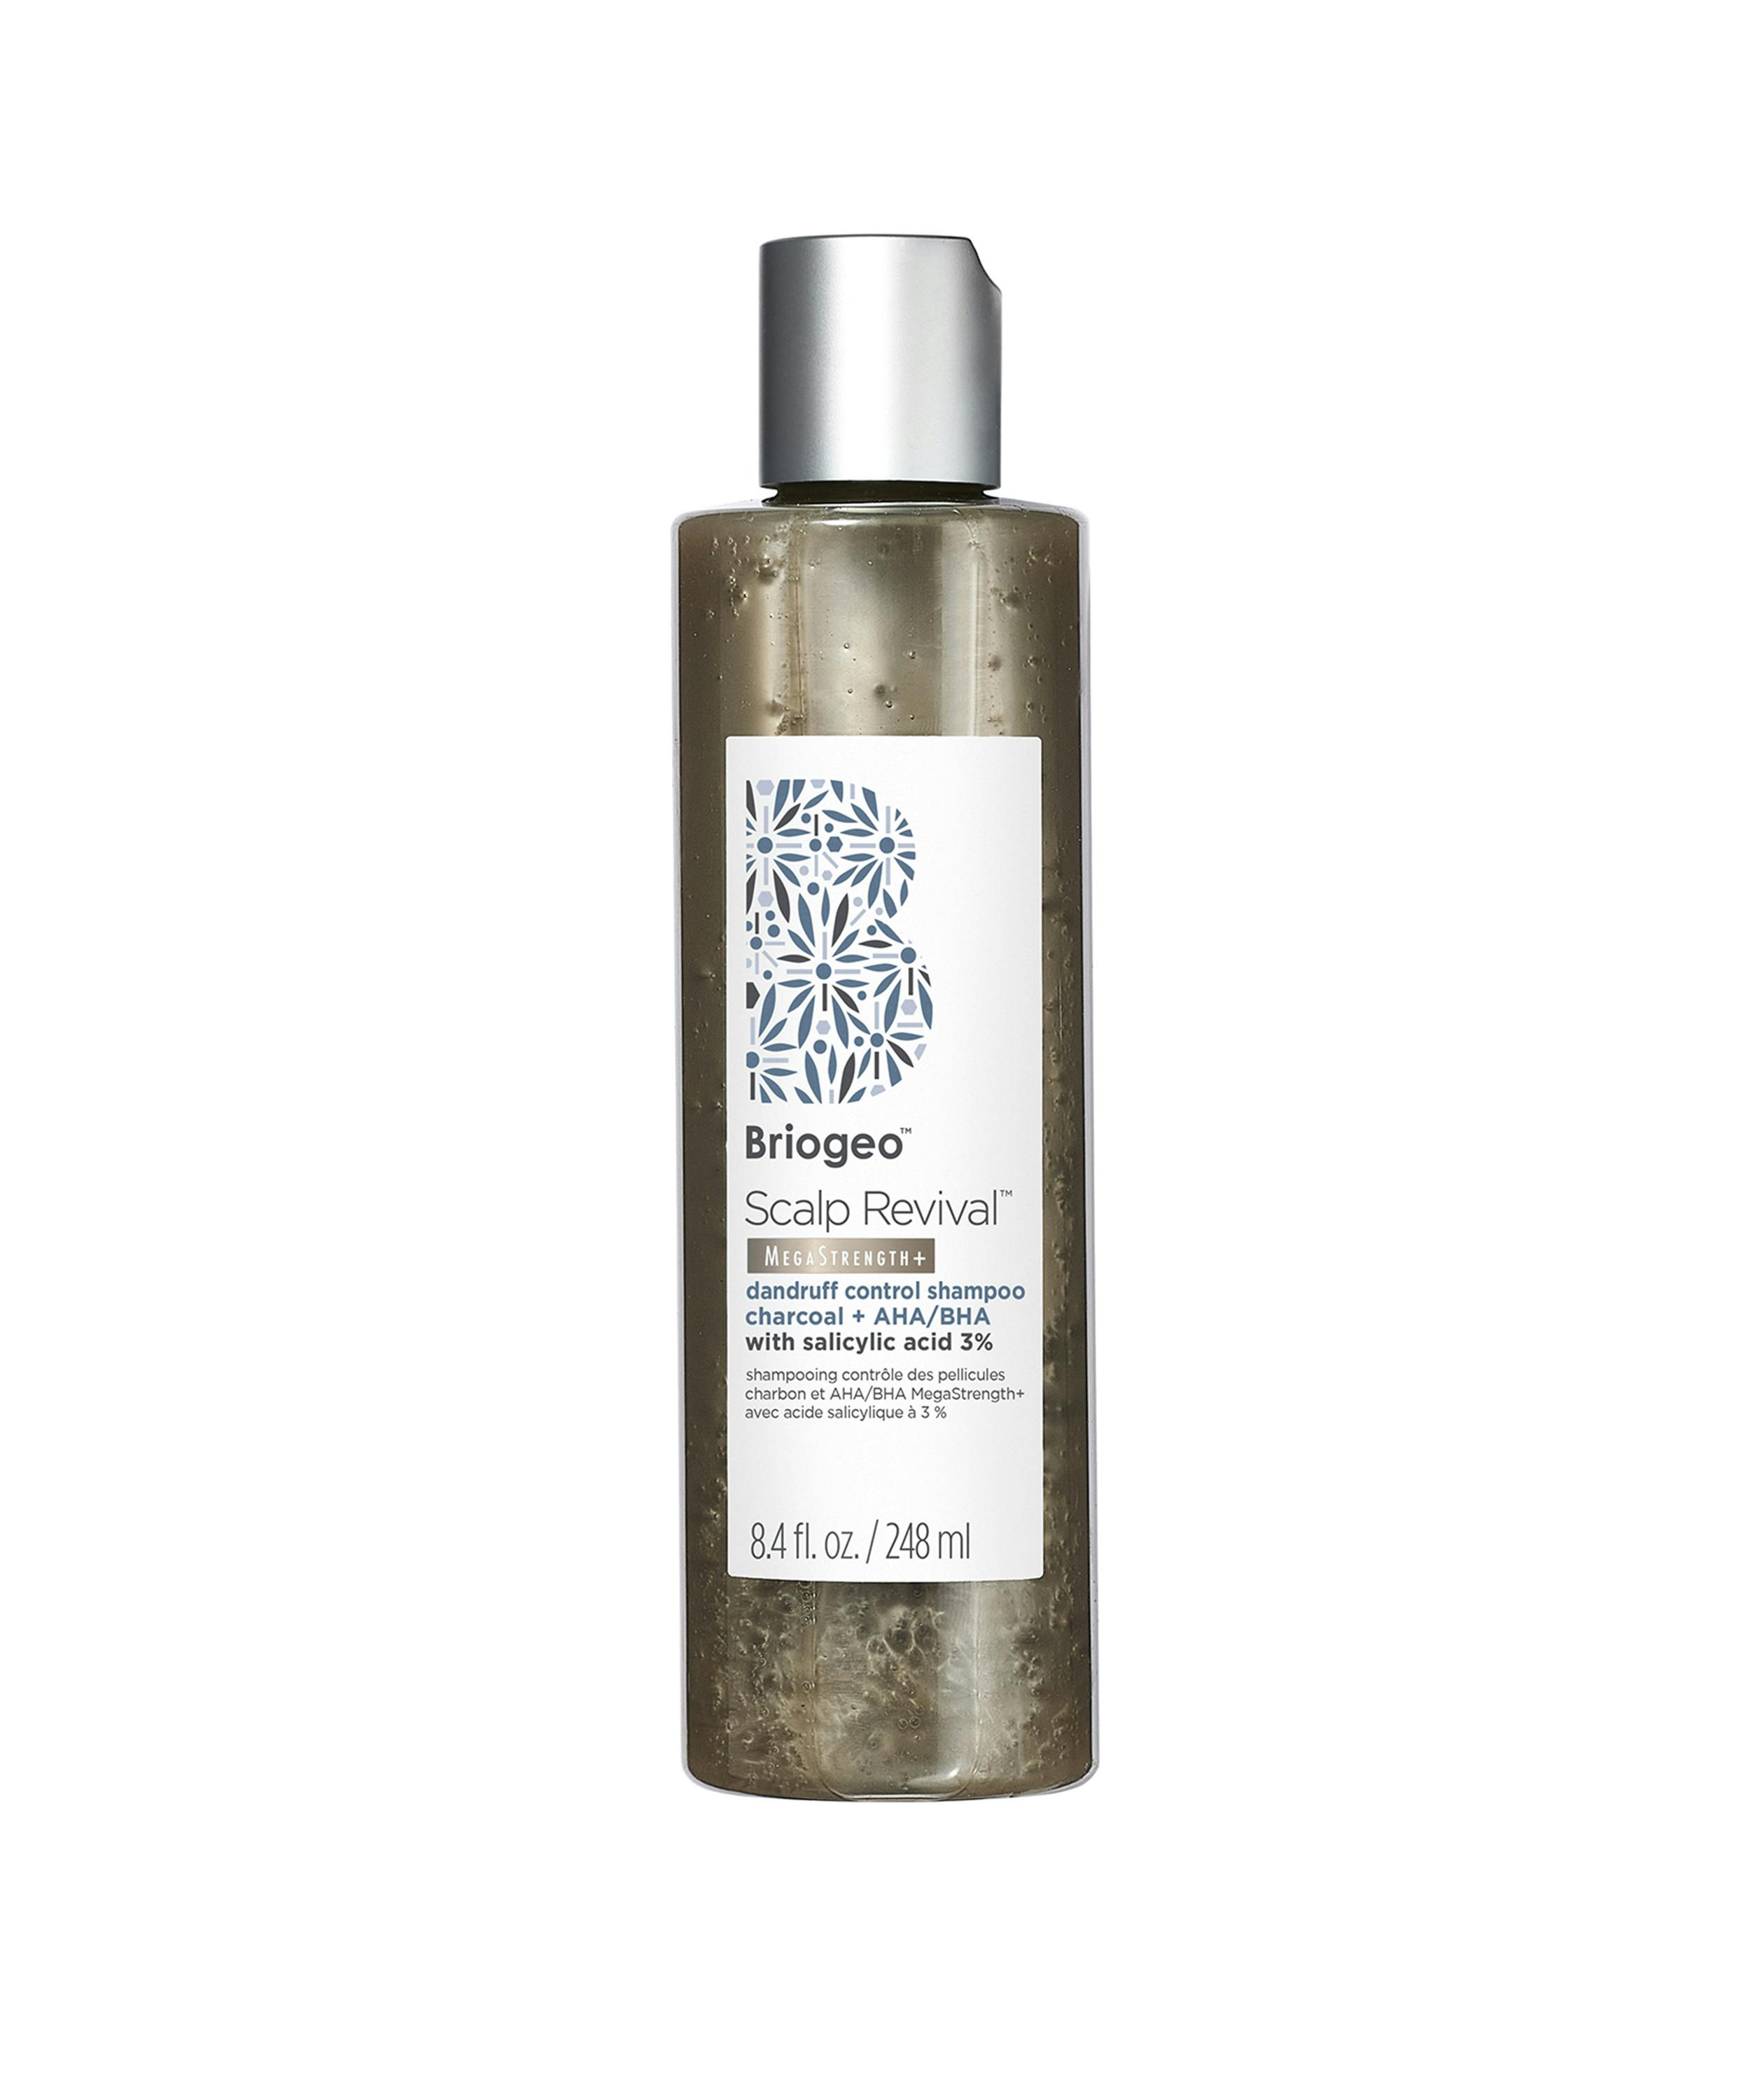 Briogeo Scalp Revival Dandruff Control Shampoo Charcoal + AHA/BHA 248 ml